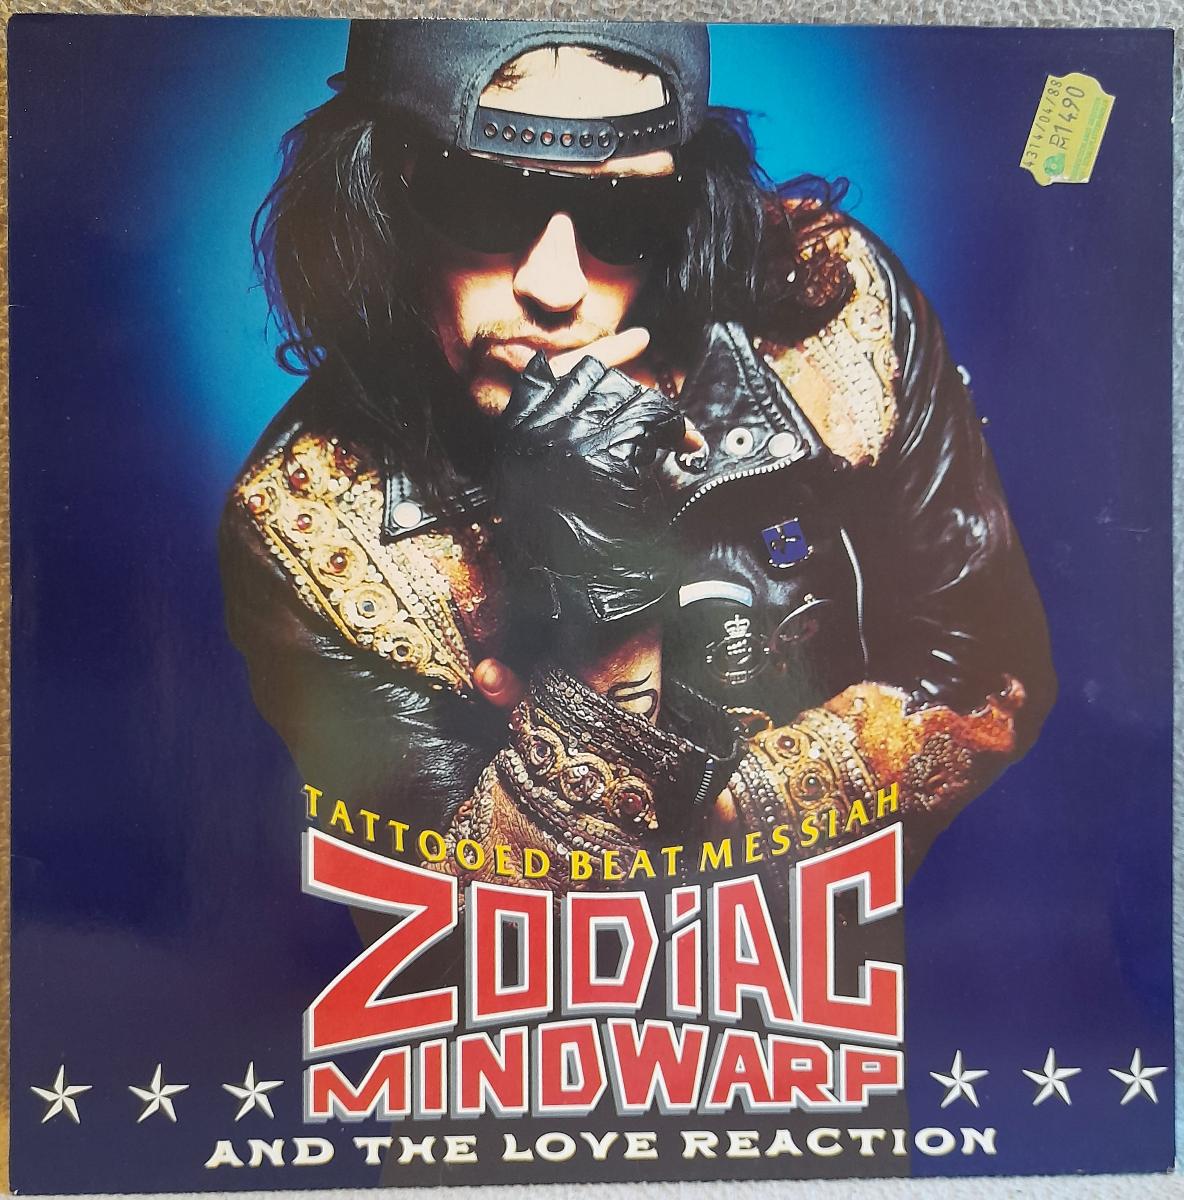 LP Zodiac Mindwarp a The Love Reaction - Tattooed Beat Messiah EX - LP / Vinylové dosky